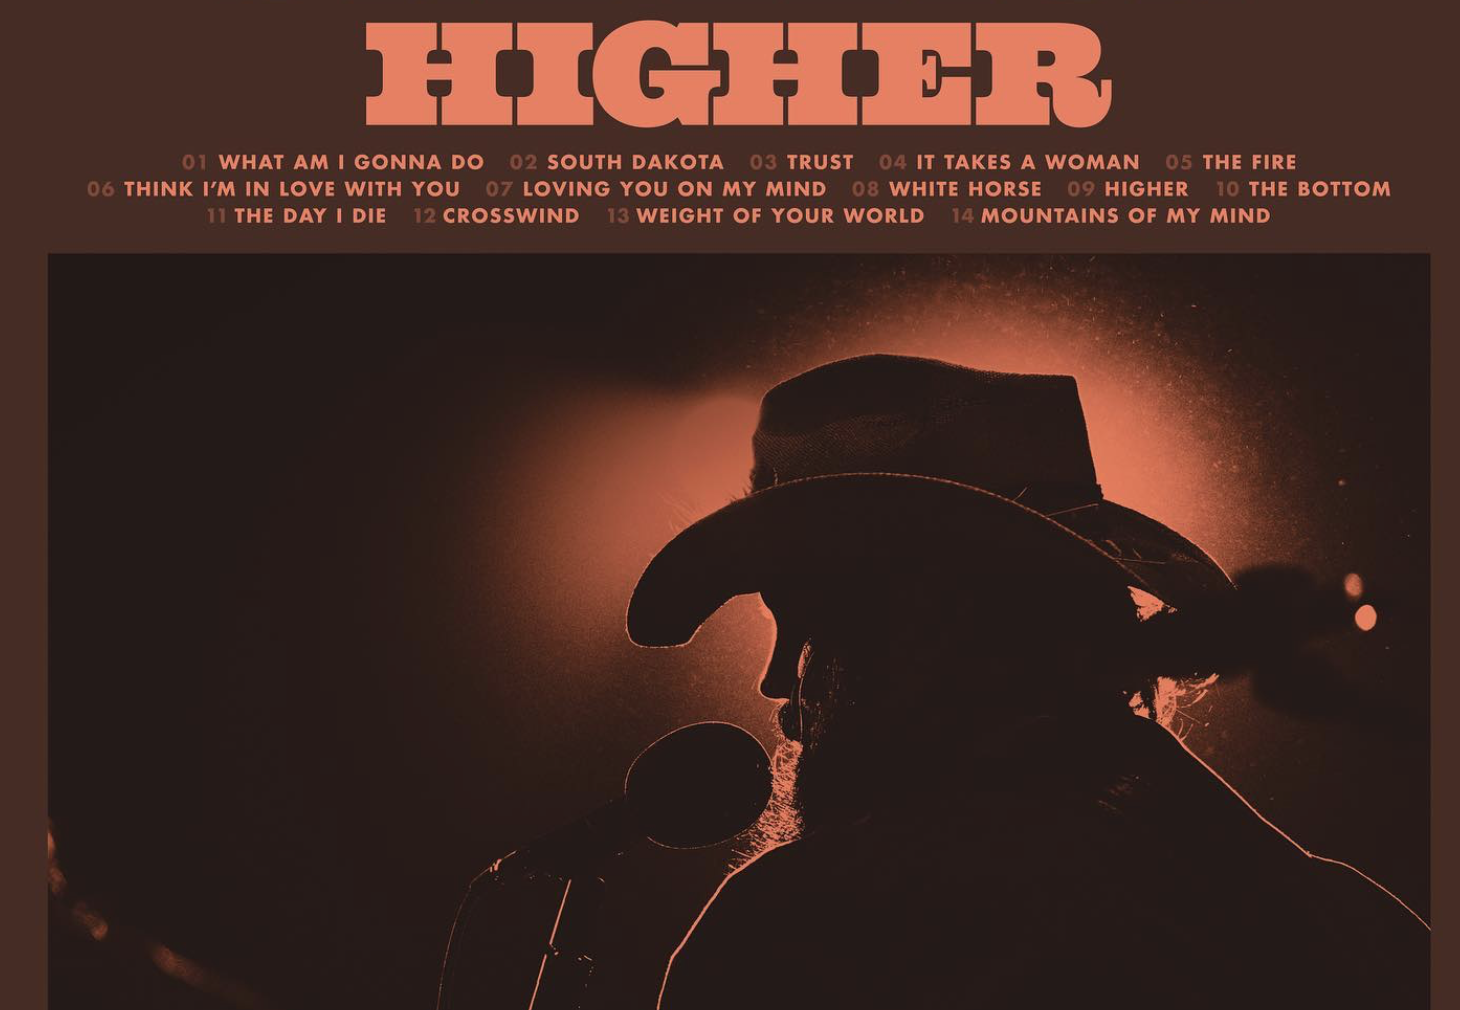 Chris Stapleton Announces "Higher" Album